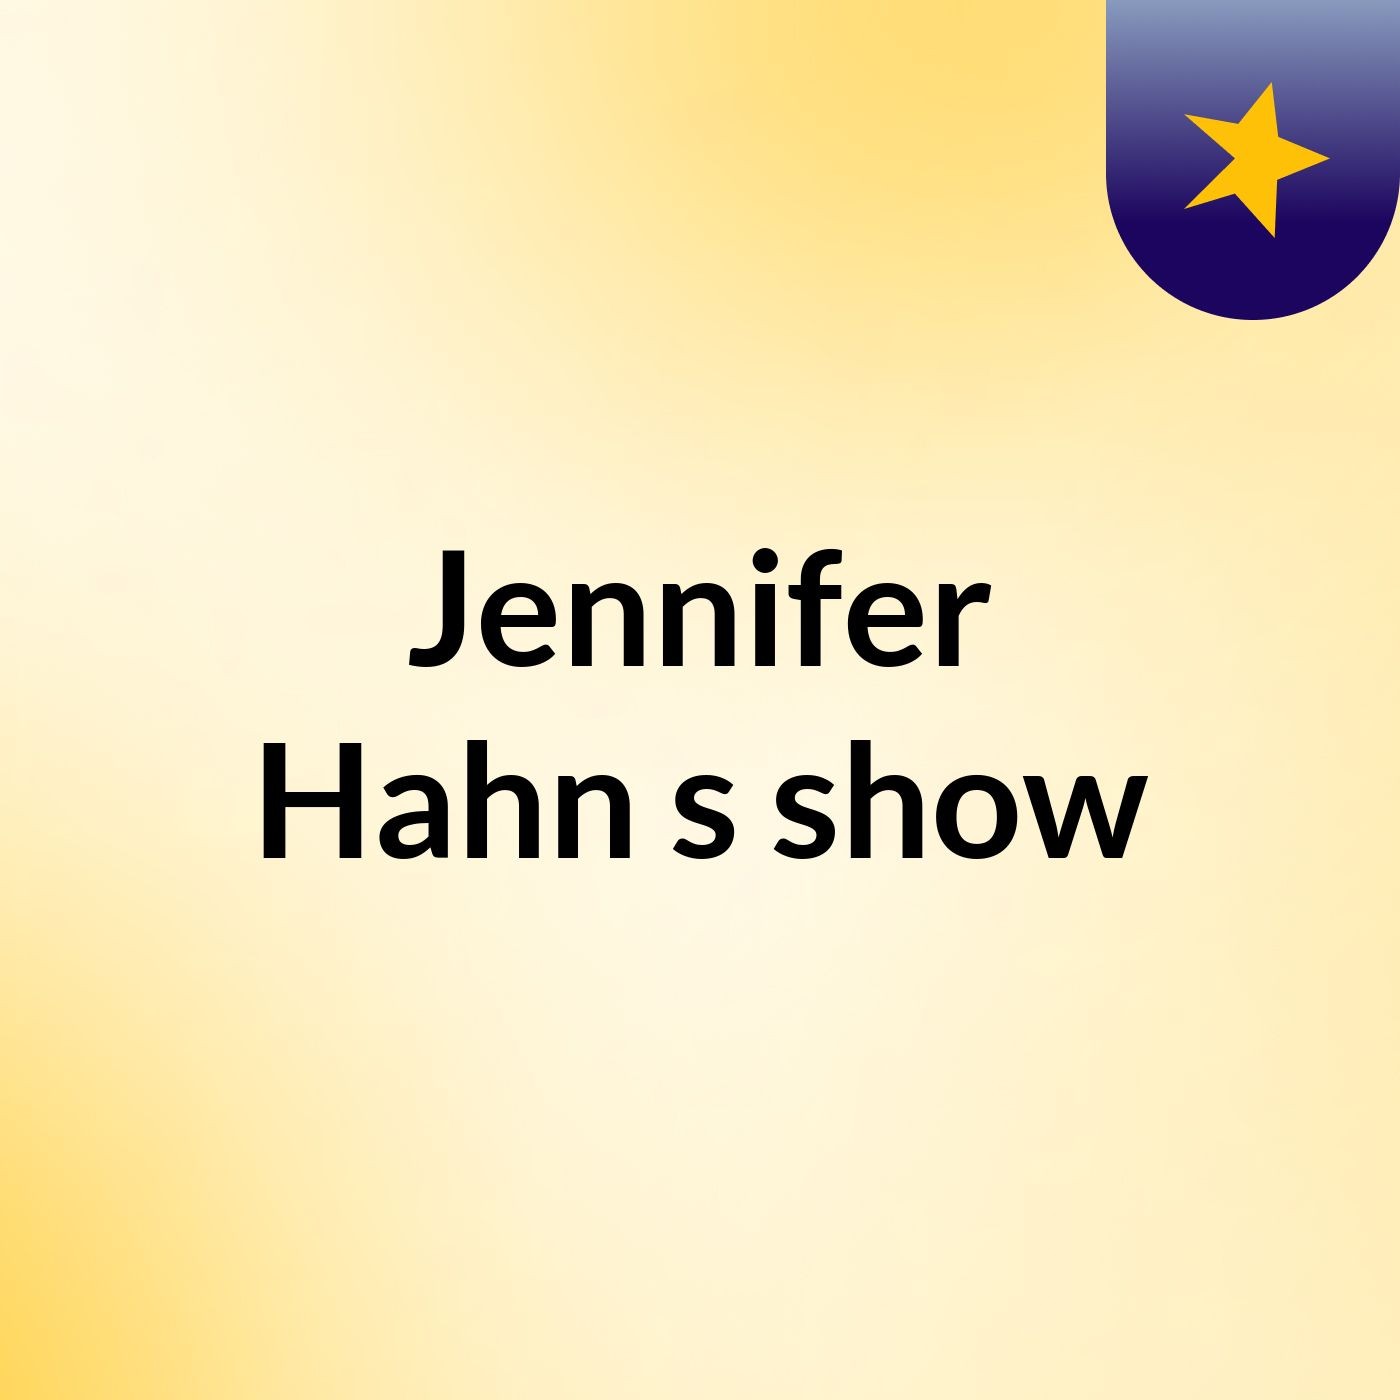 Episode 3 - Jennifer Hahn's show